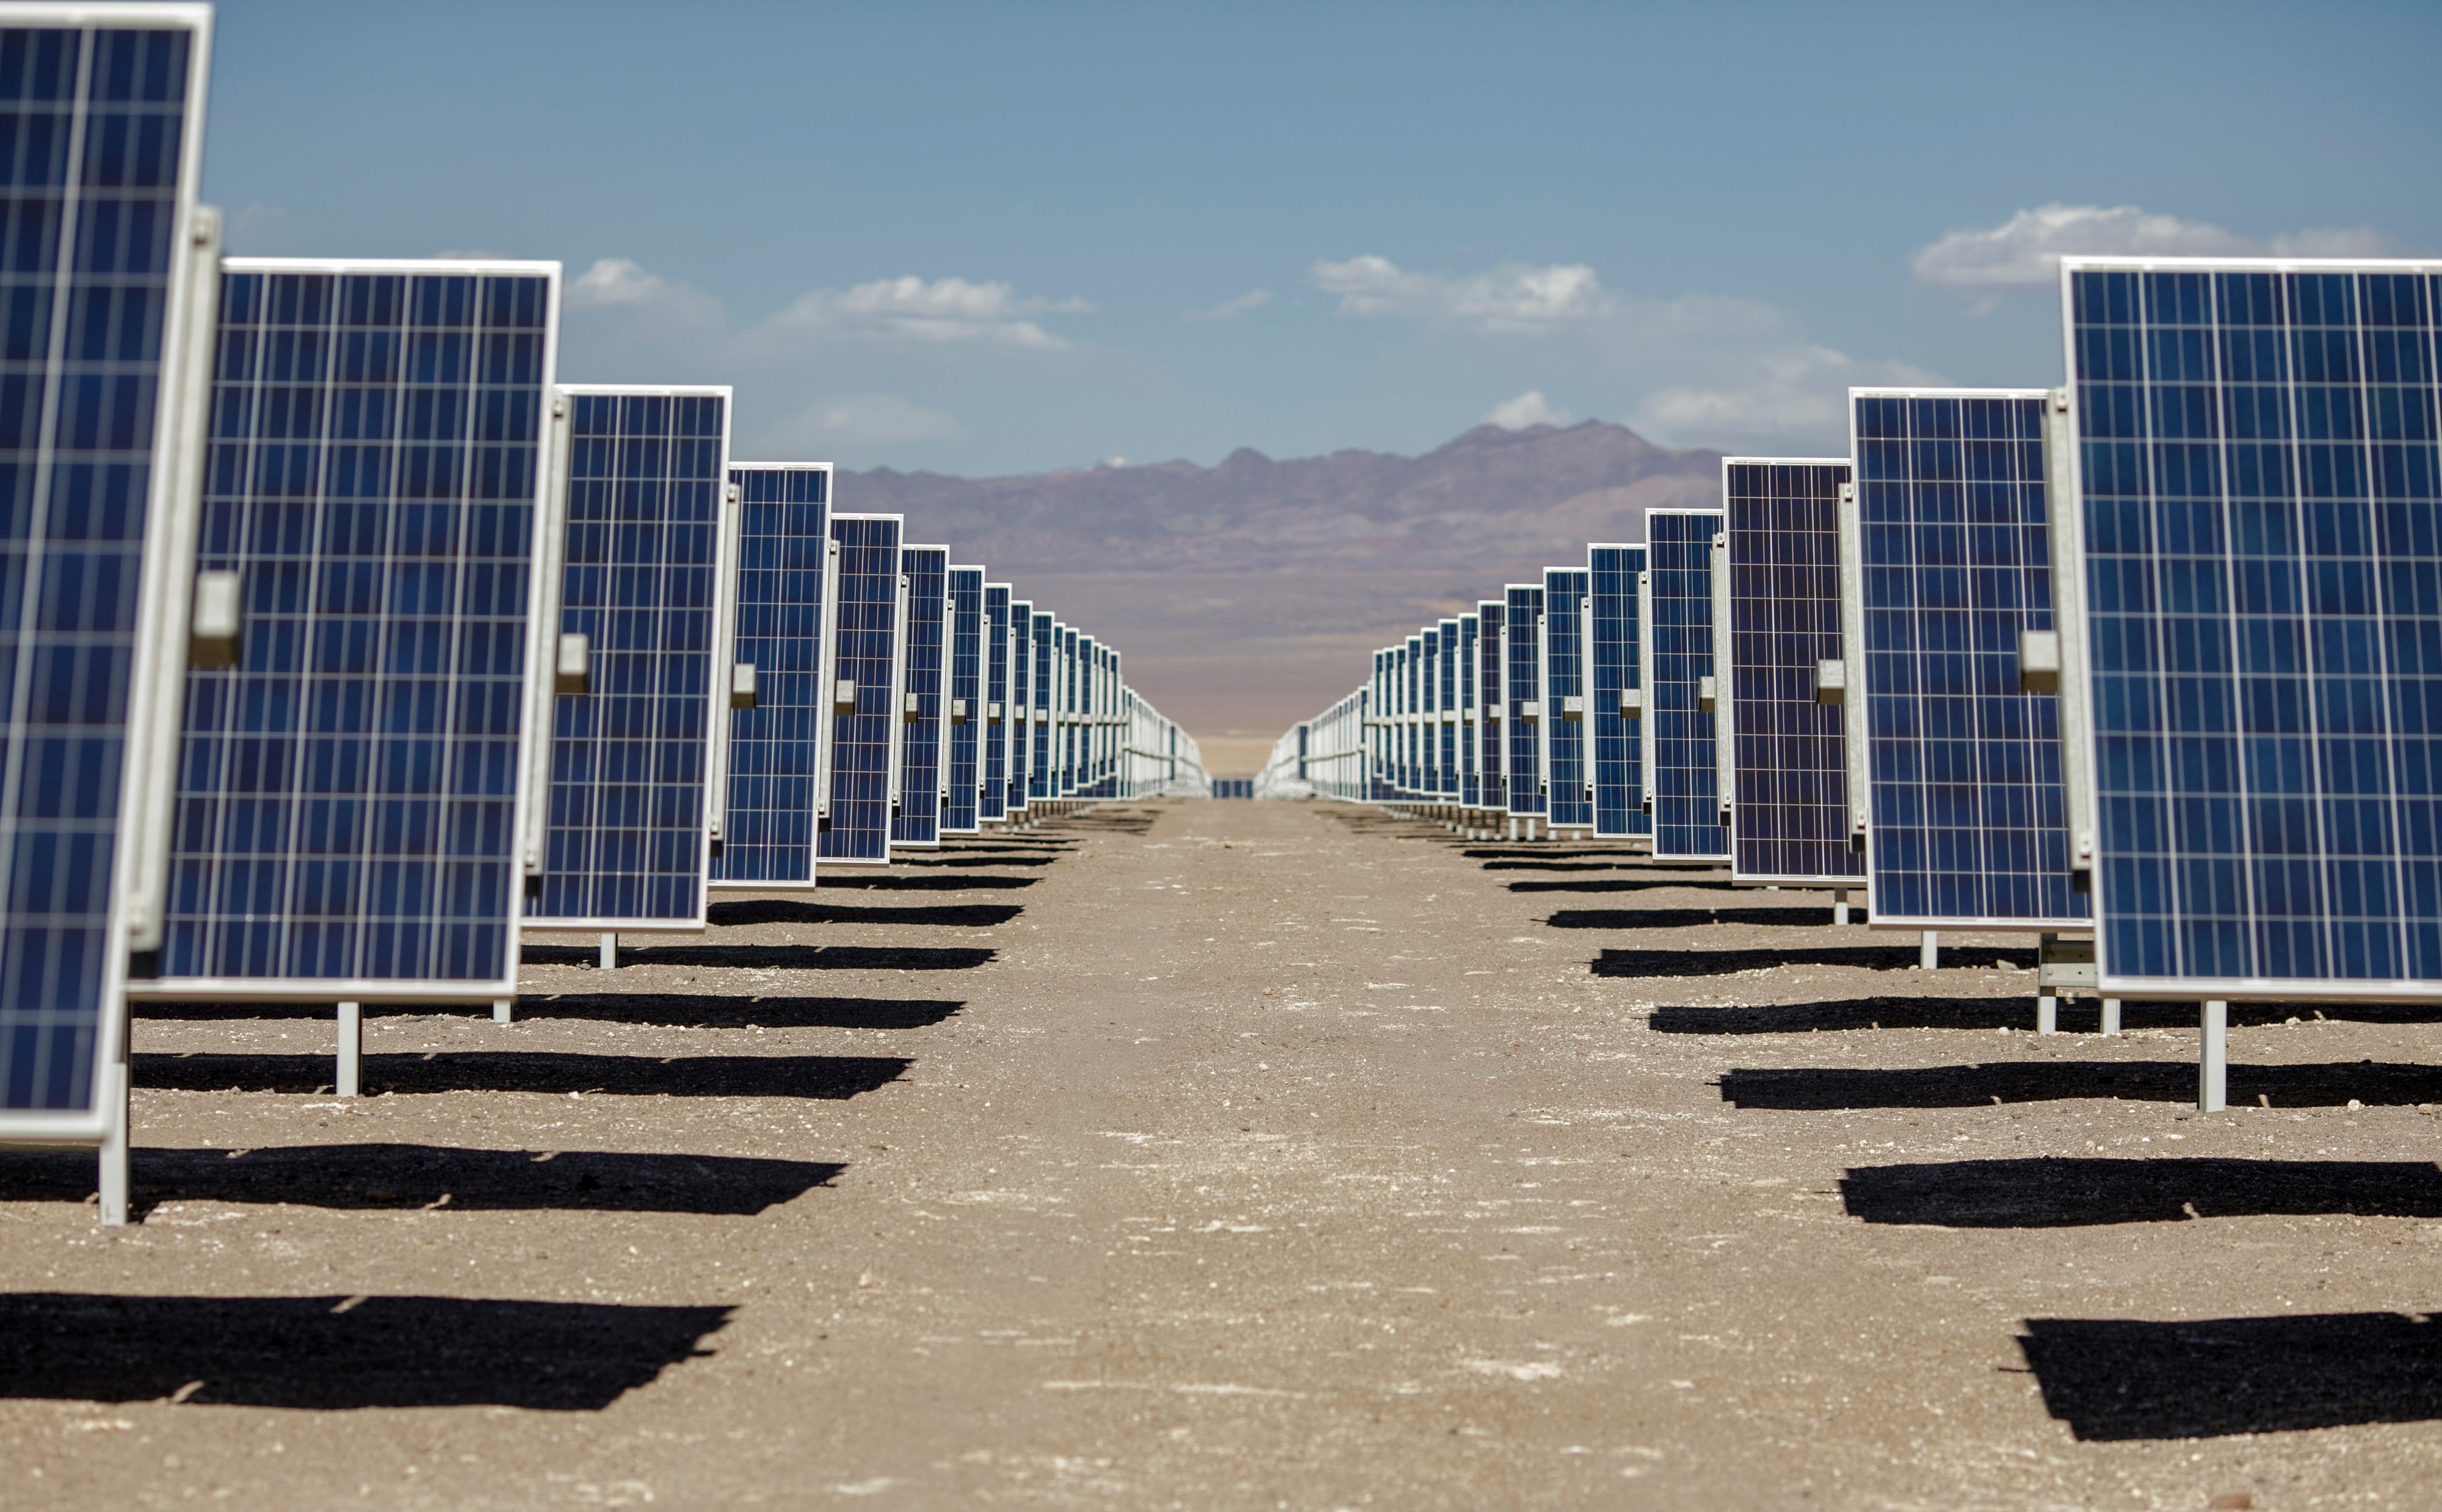 Solaranlage Solar Jama in der Atacama-Wüste in Chile